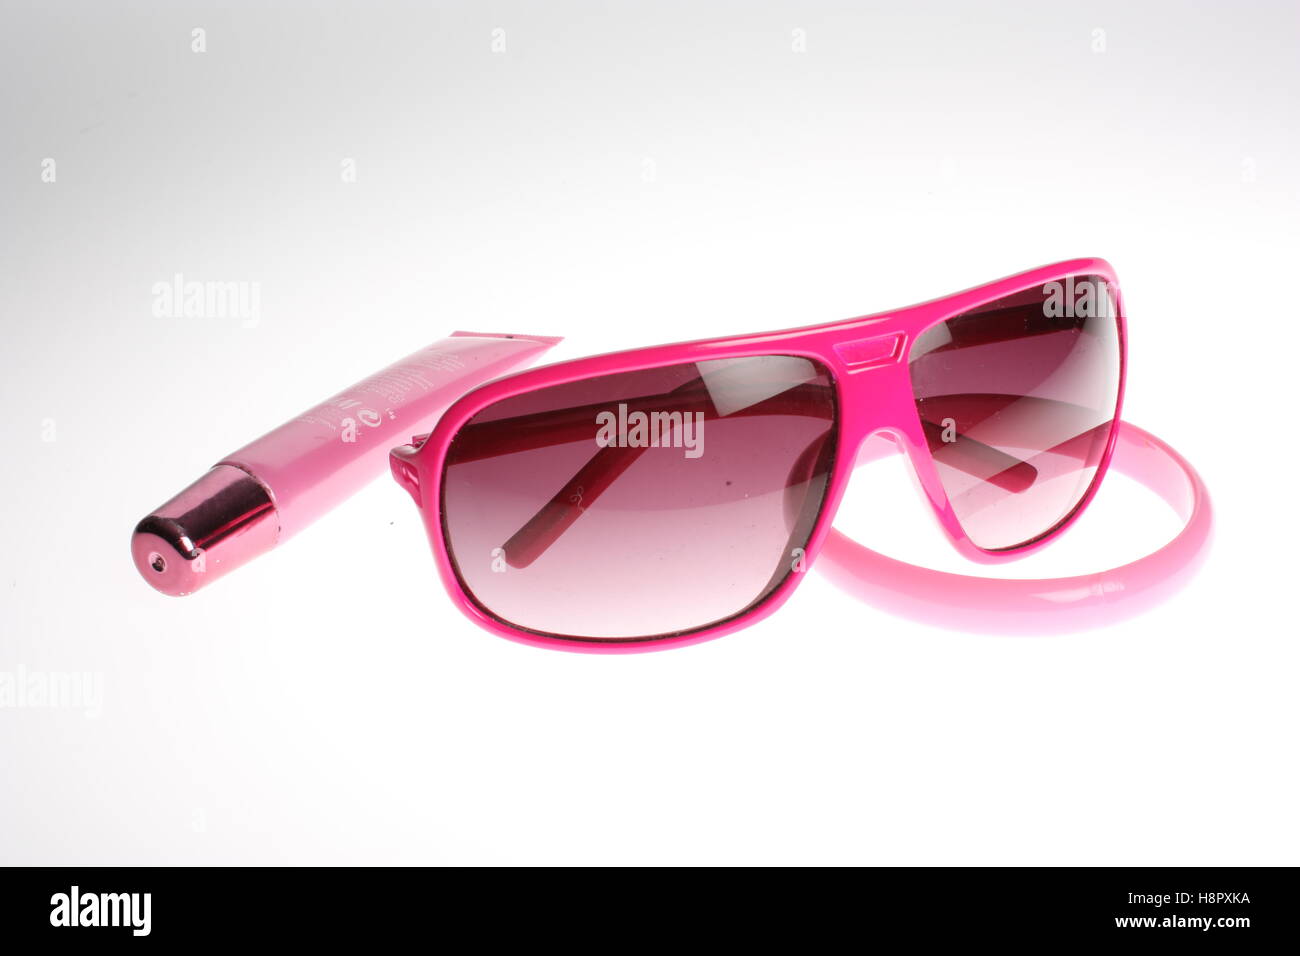 Pink still life items pink glasses, bracelet, lipstick and lipgloss Stock Photo